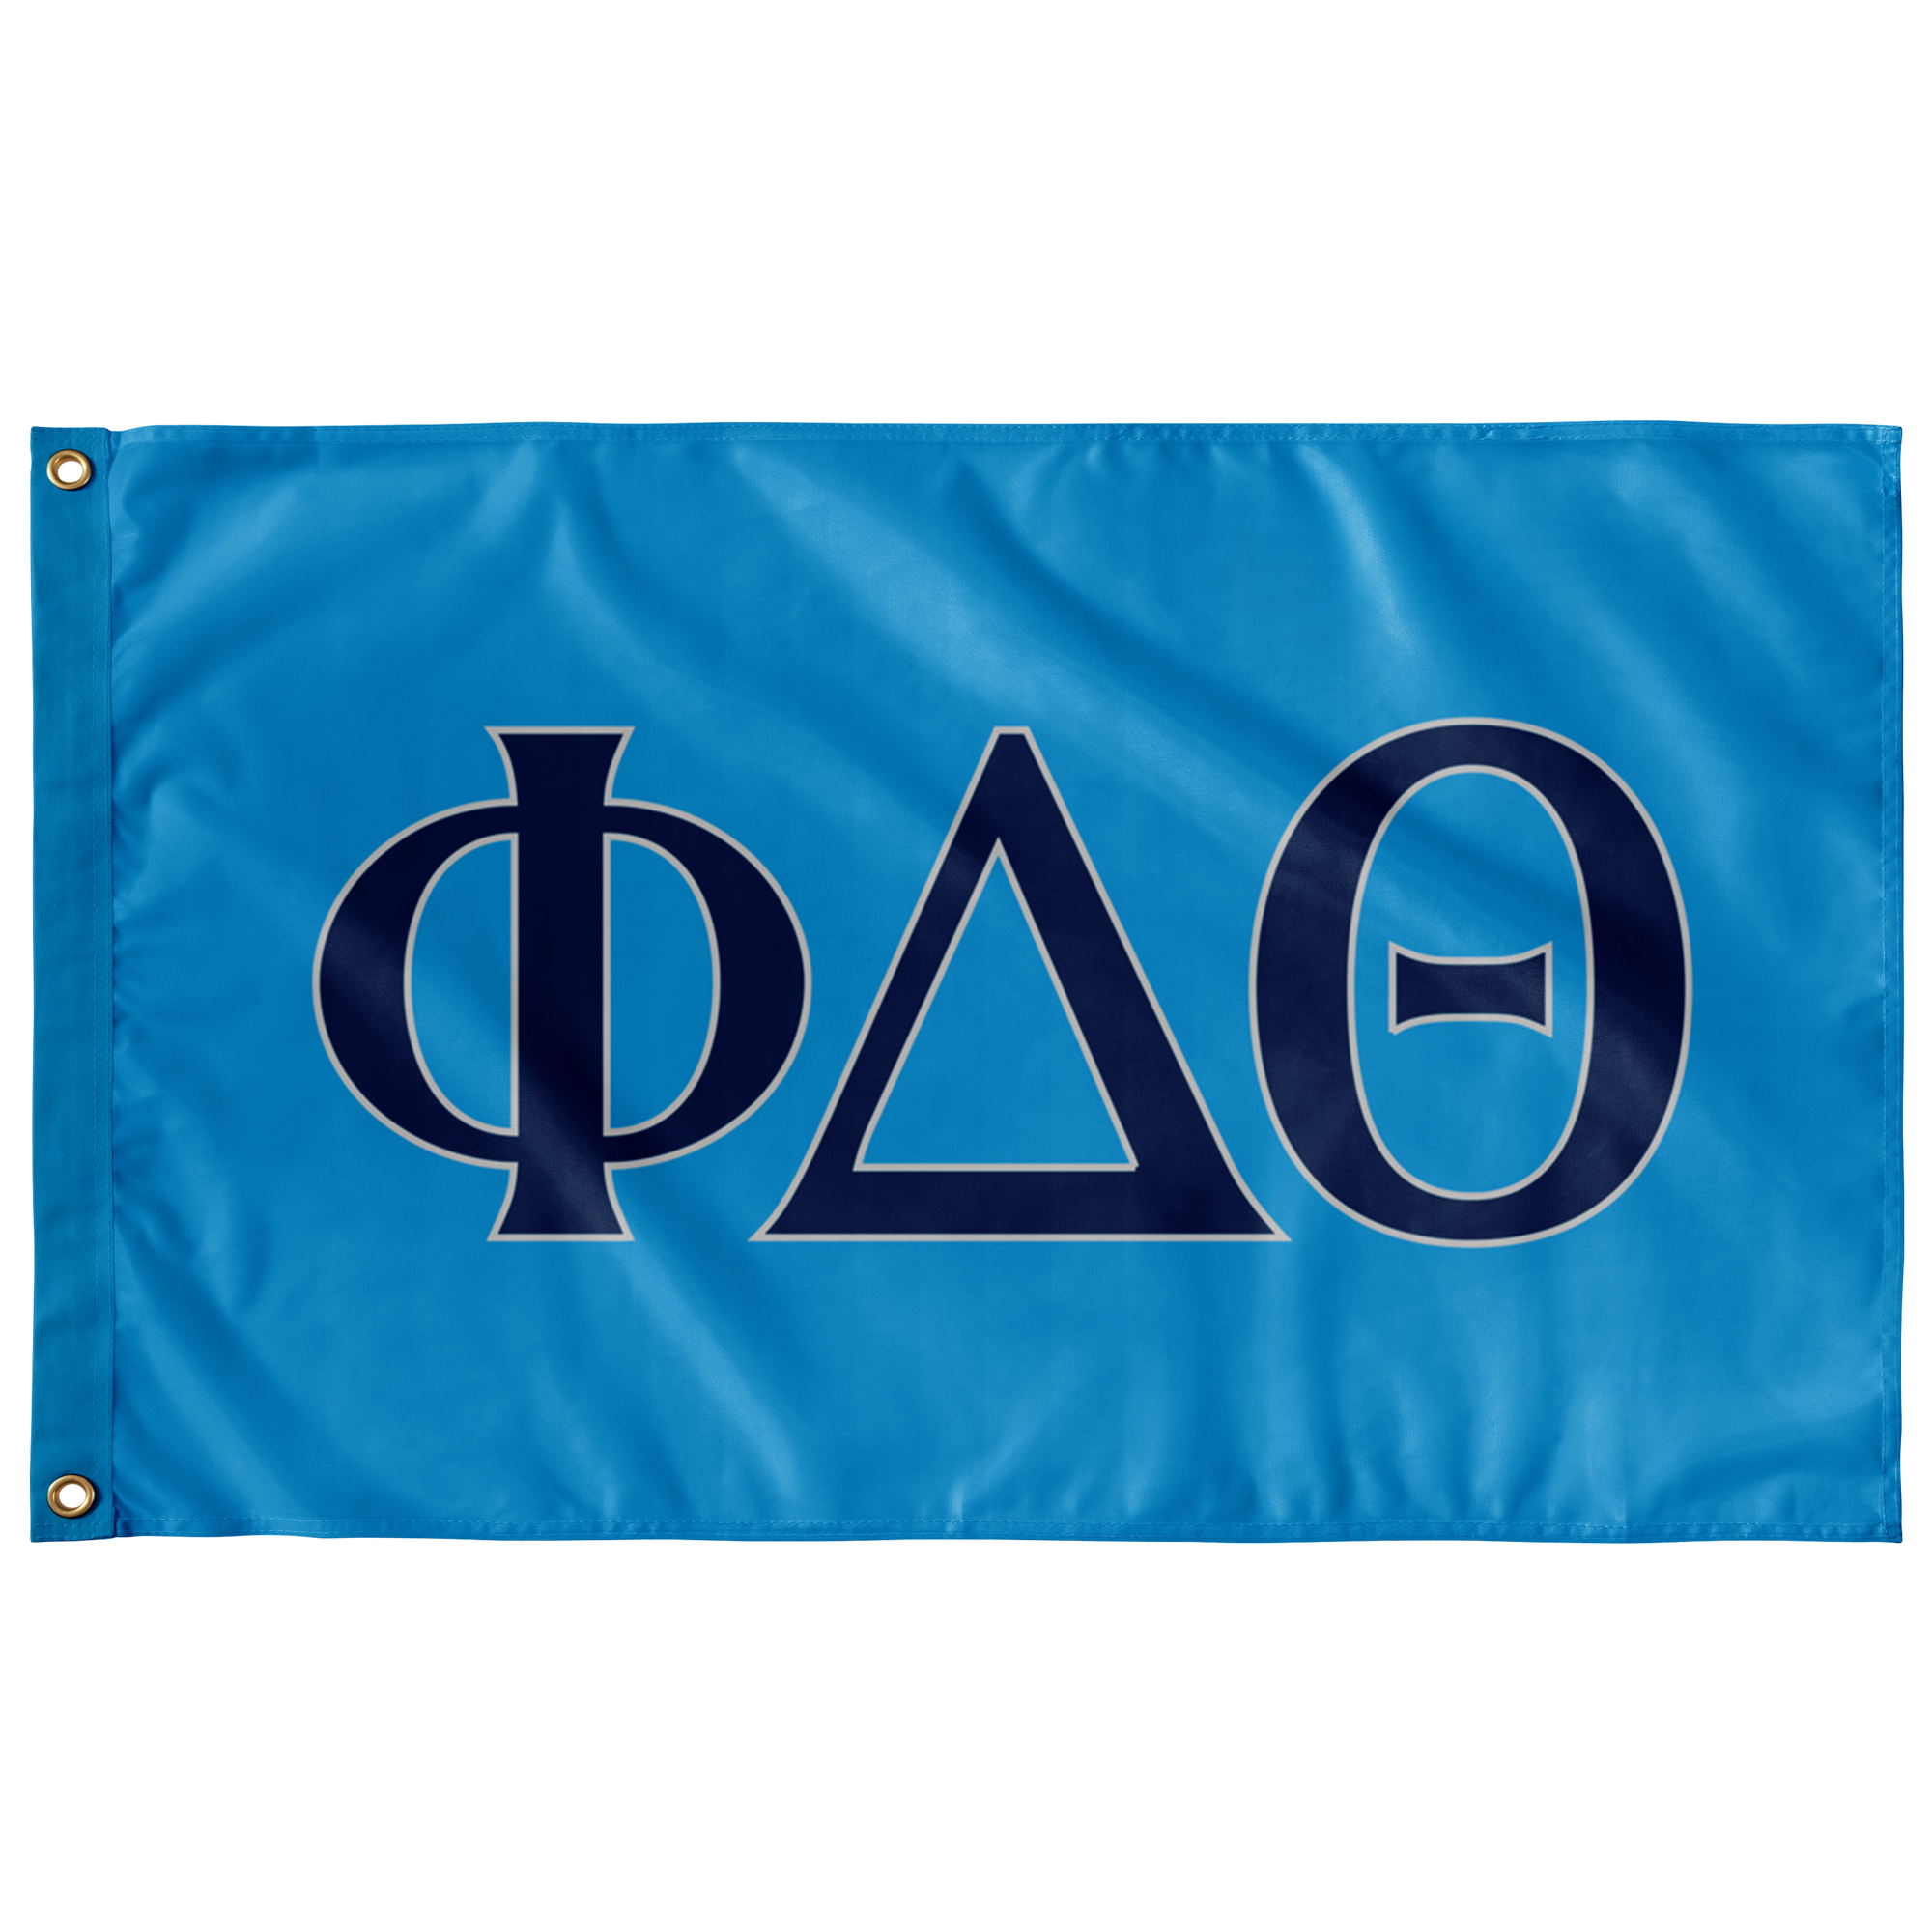 Delta Sigma Phi Custom Fraternity Paddle - Greek Gear